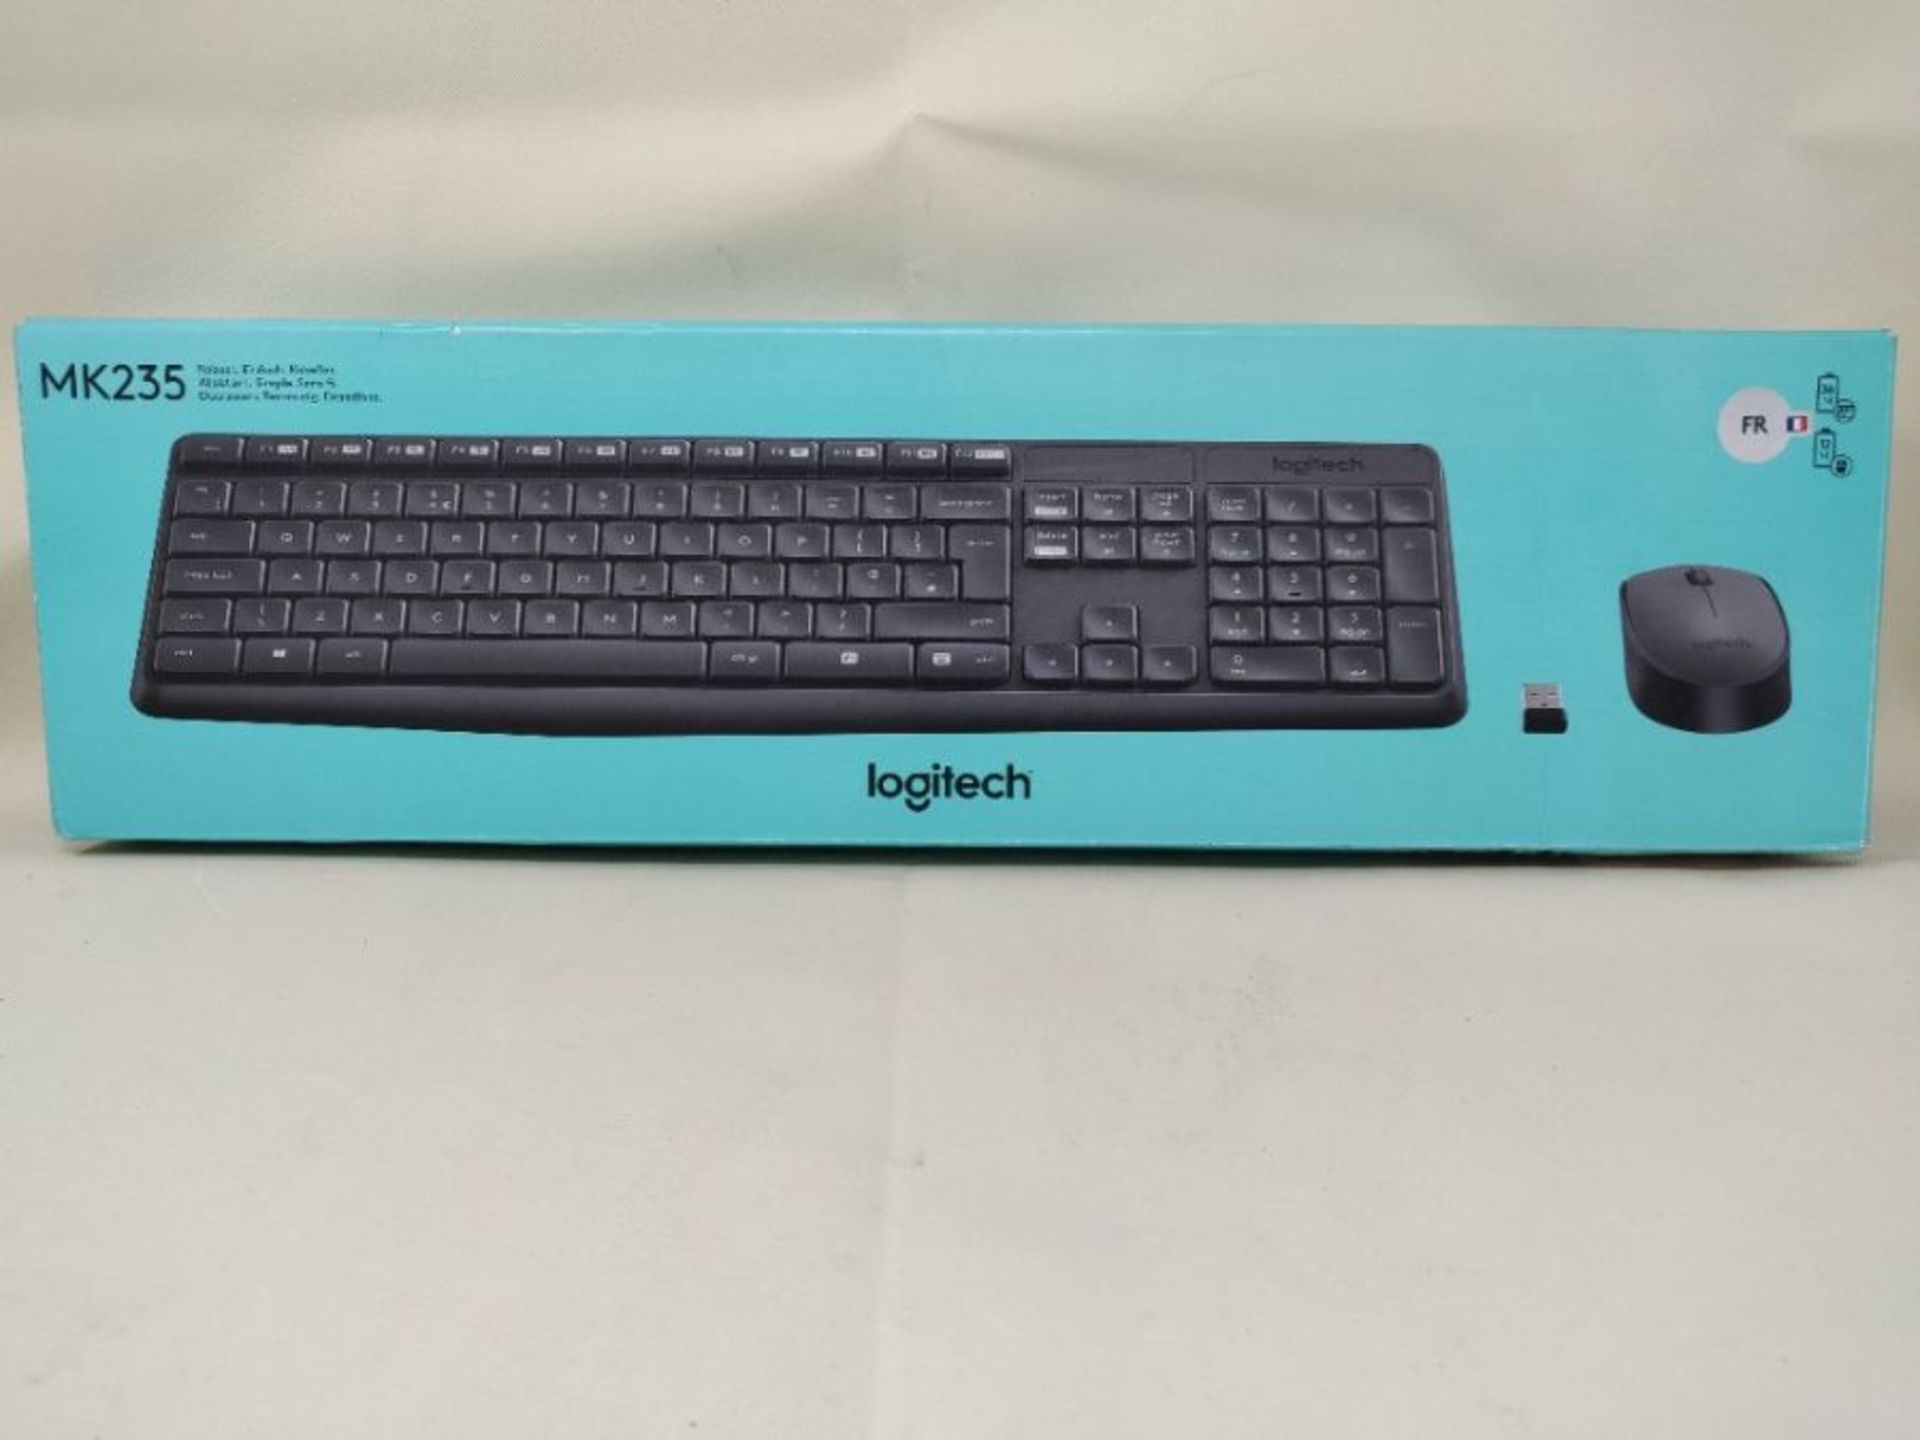 Logitech MK235 Wireless Keyboard and Mouse Combo, AZERTY French Layout - Black - Image 2 of 6